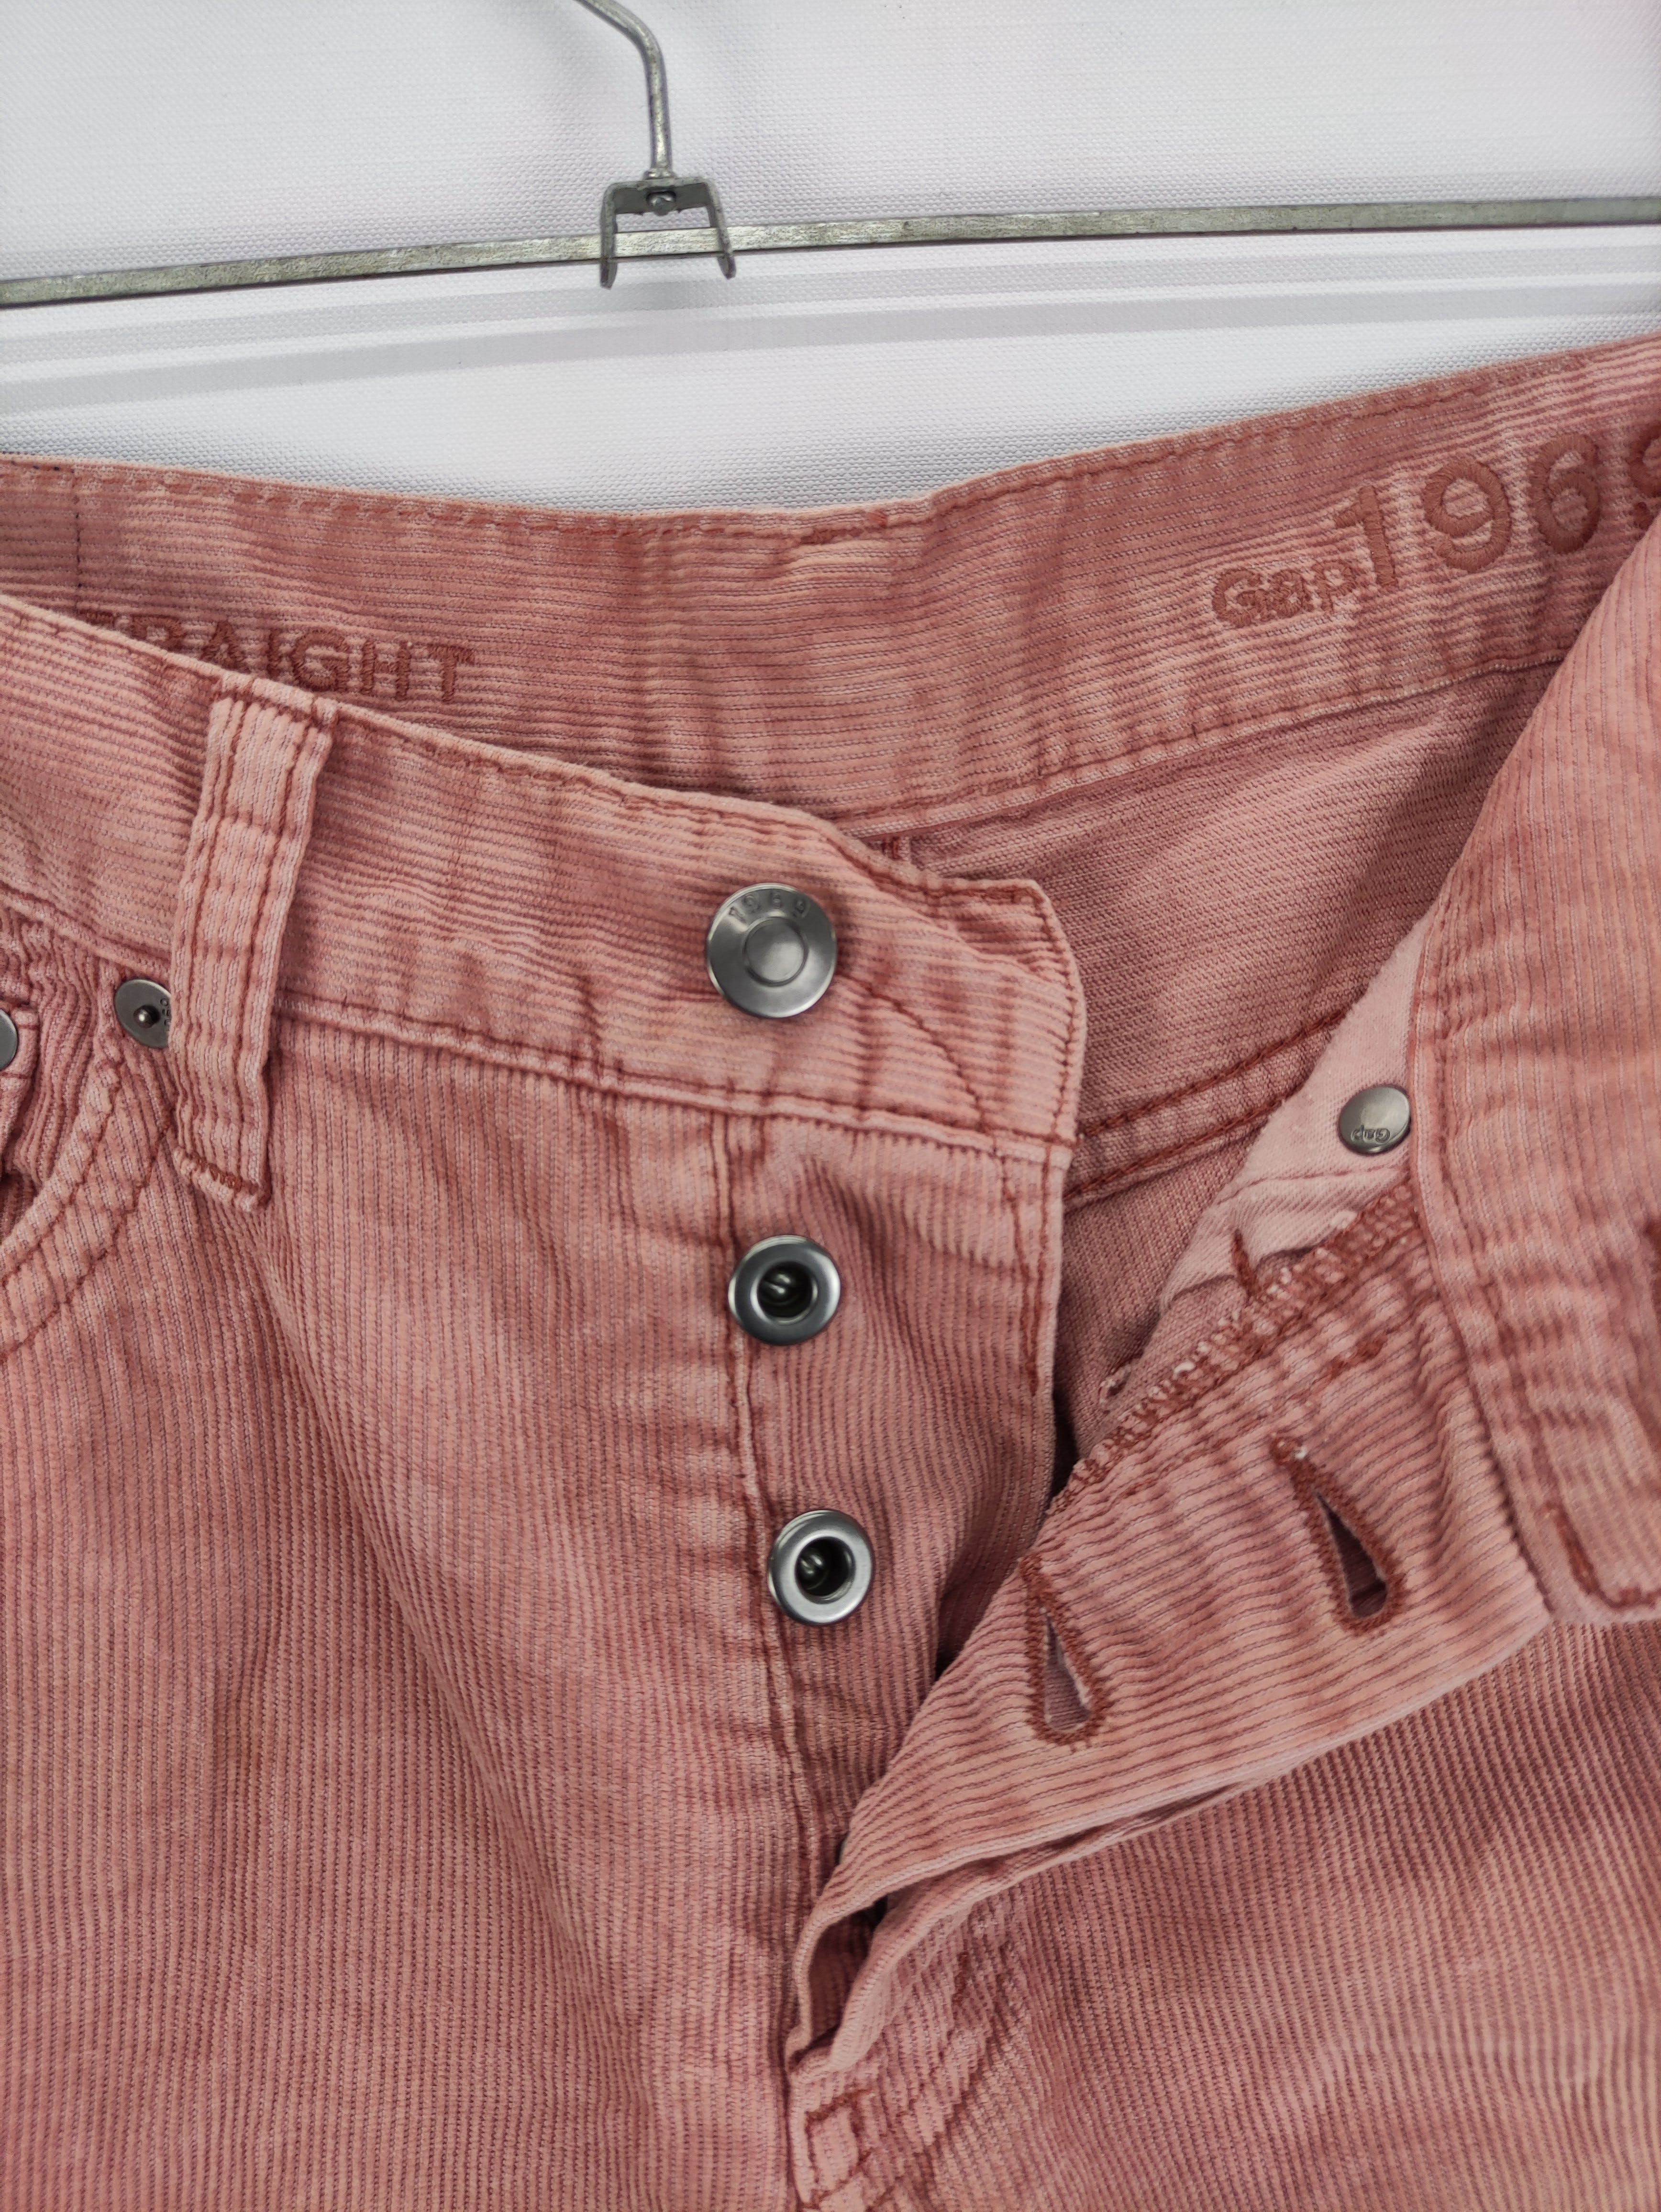 Vintage Gap Corduroy Short Pant - 4